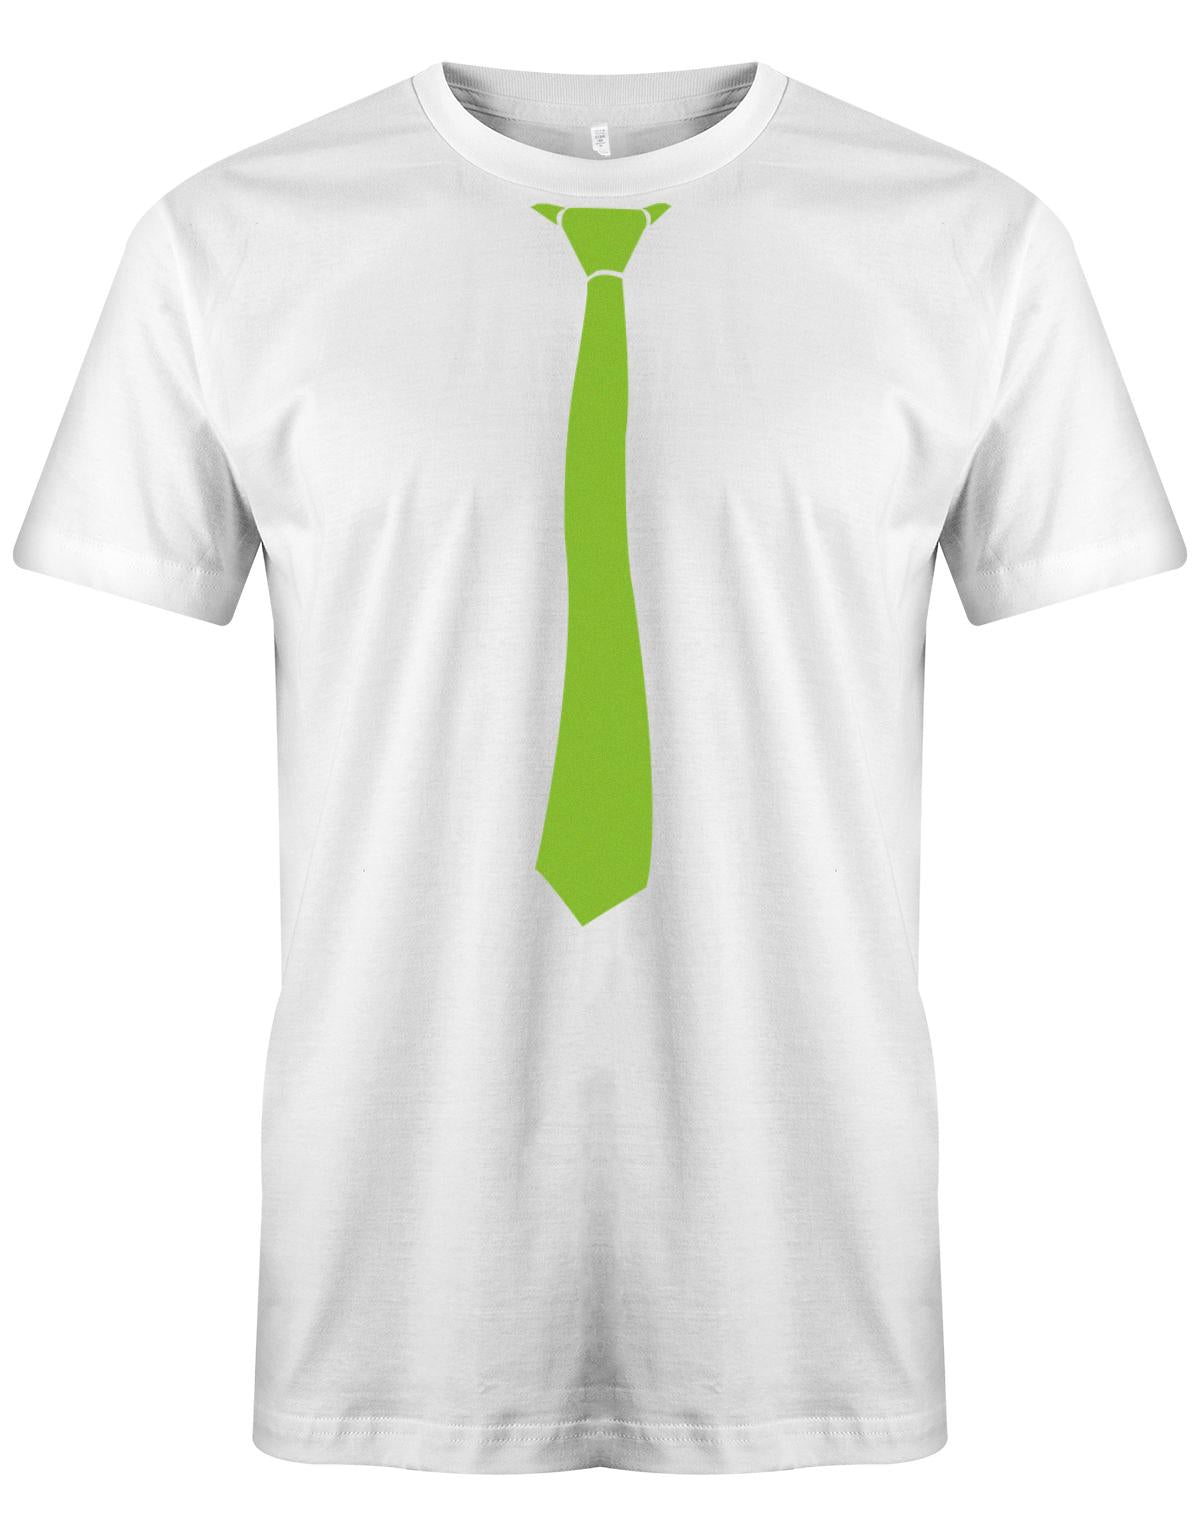 Krawatte-Sportlich-Herren-Shirt-JGA-Weiss-Gr-n